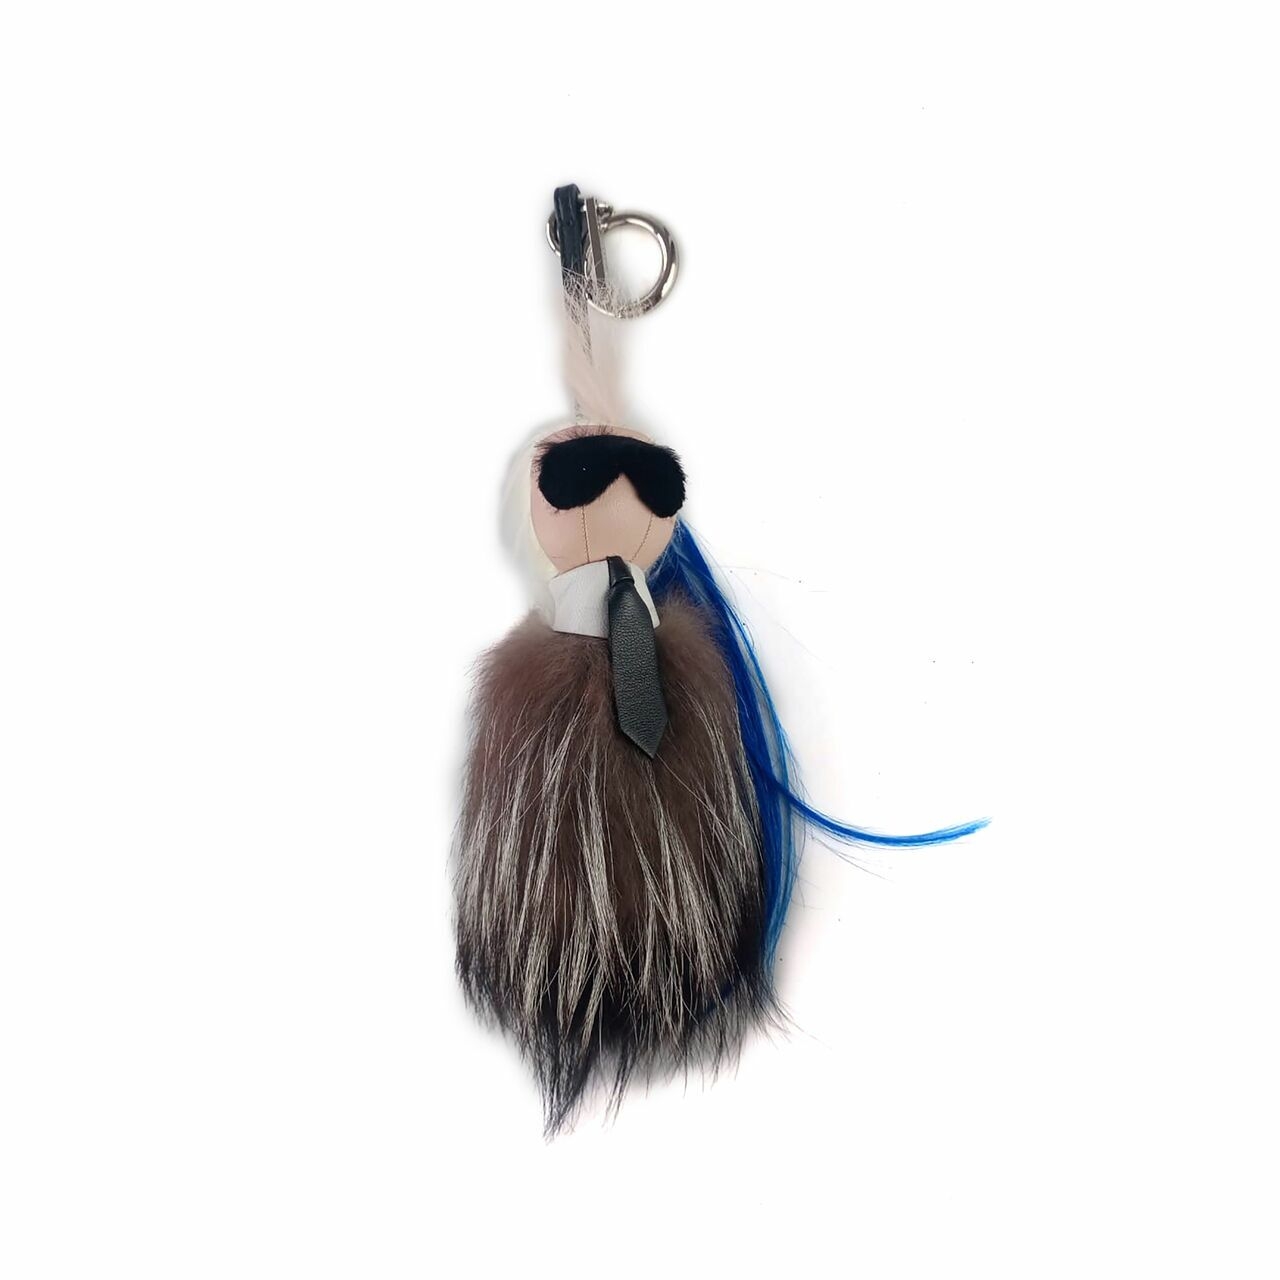 Fendi Karlito Bag Charm Keychain